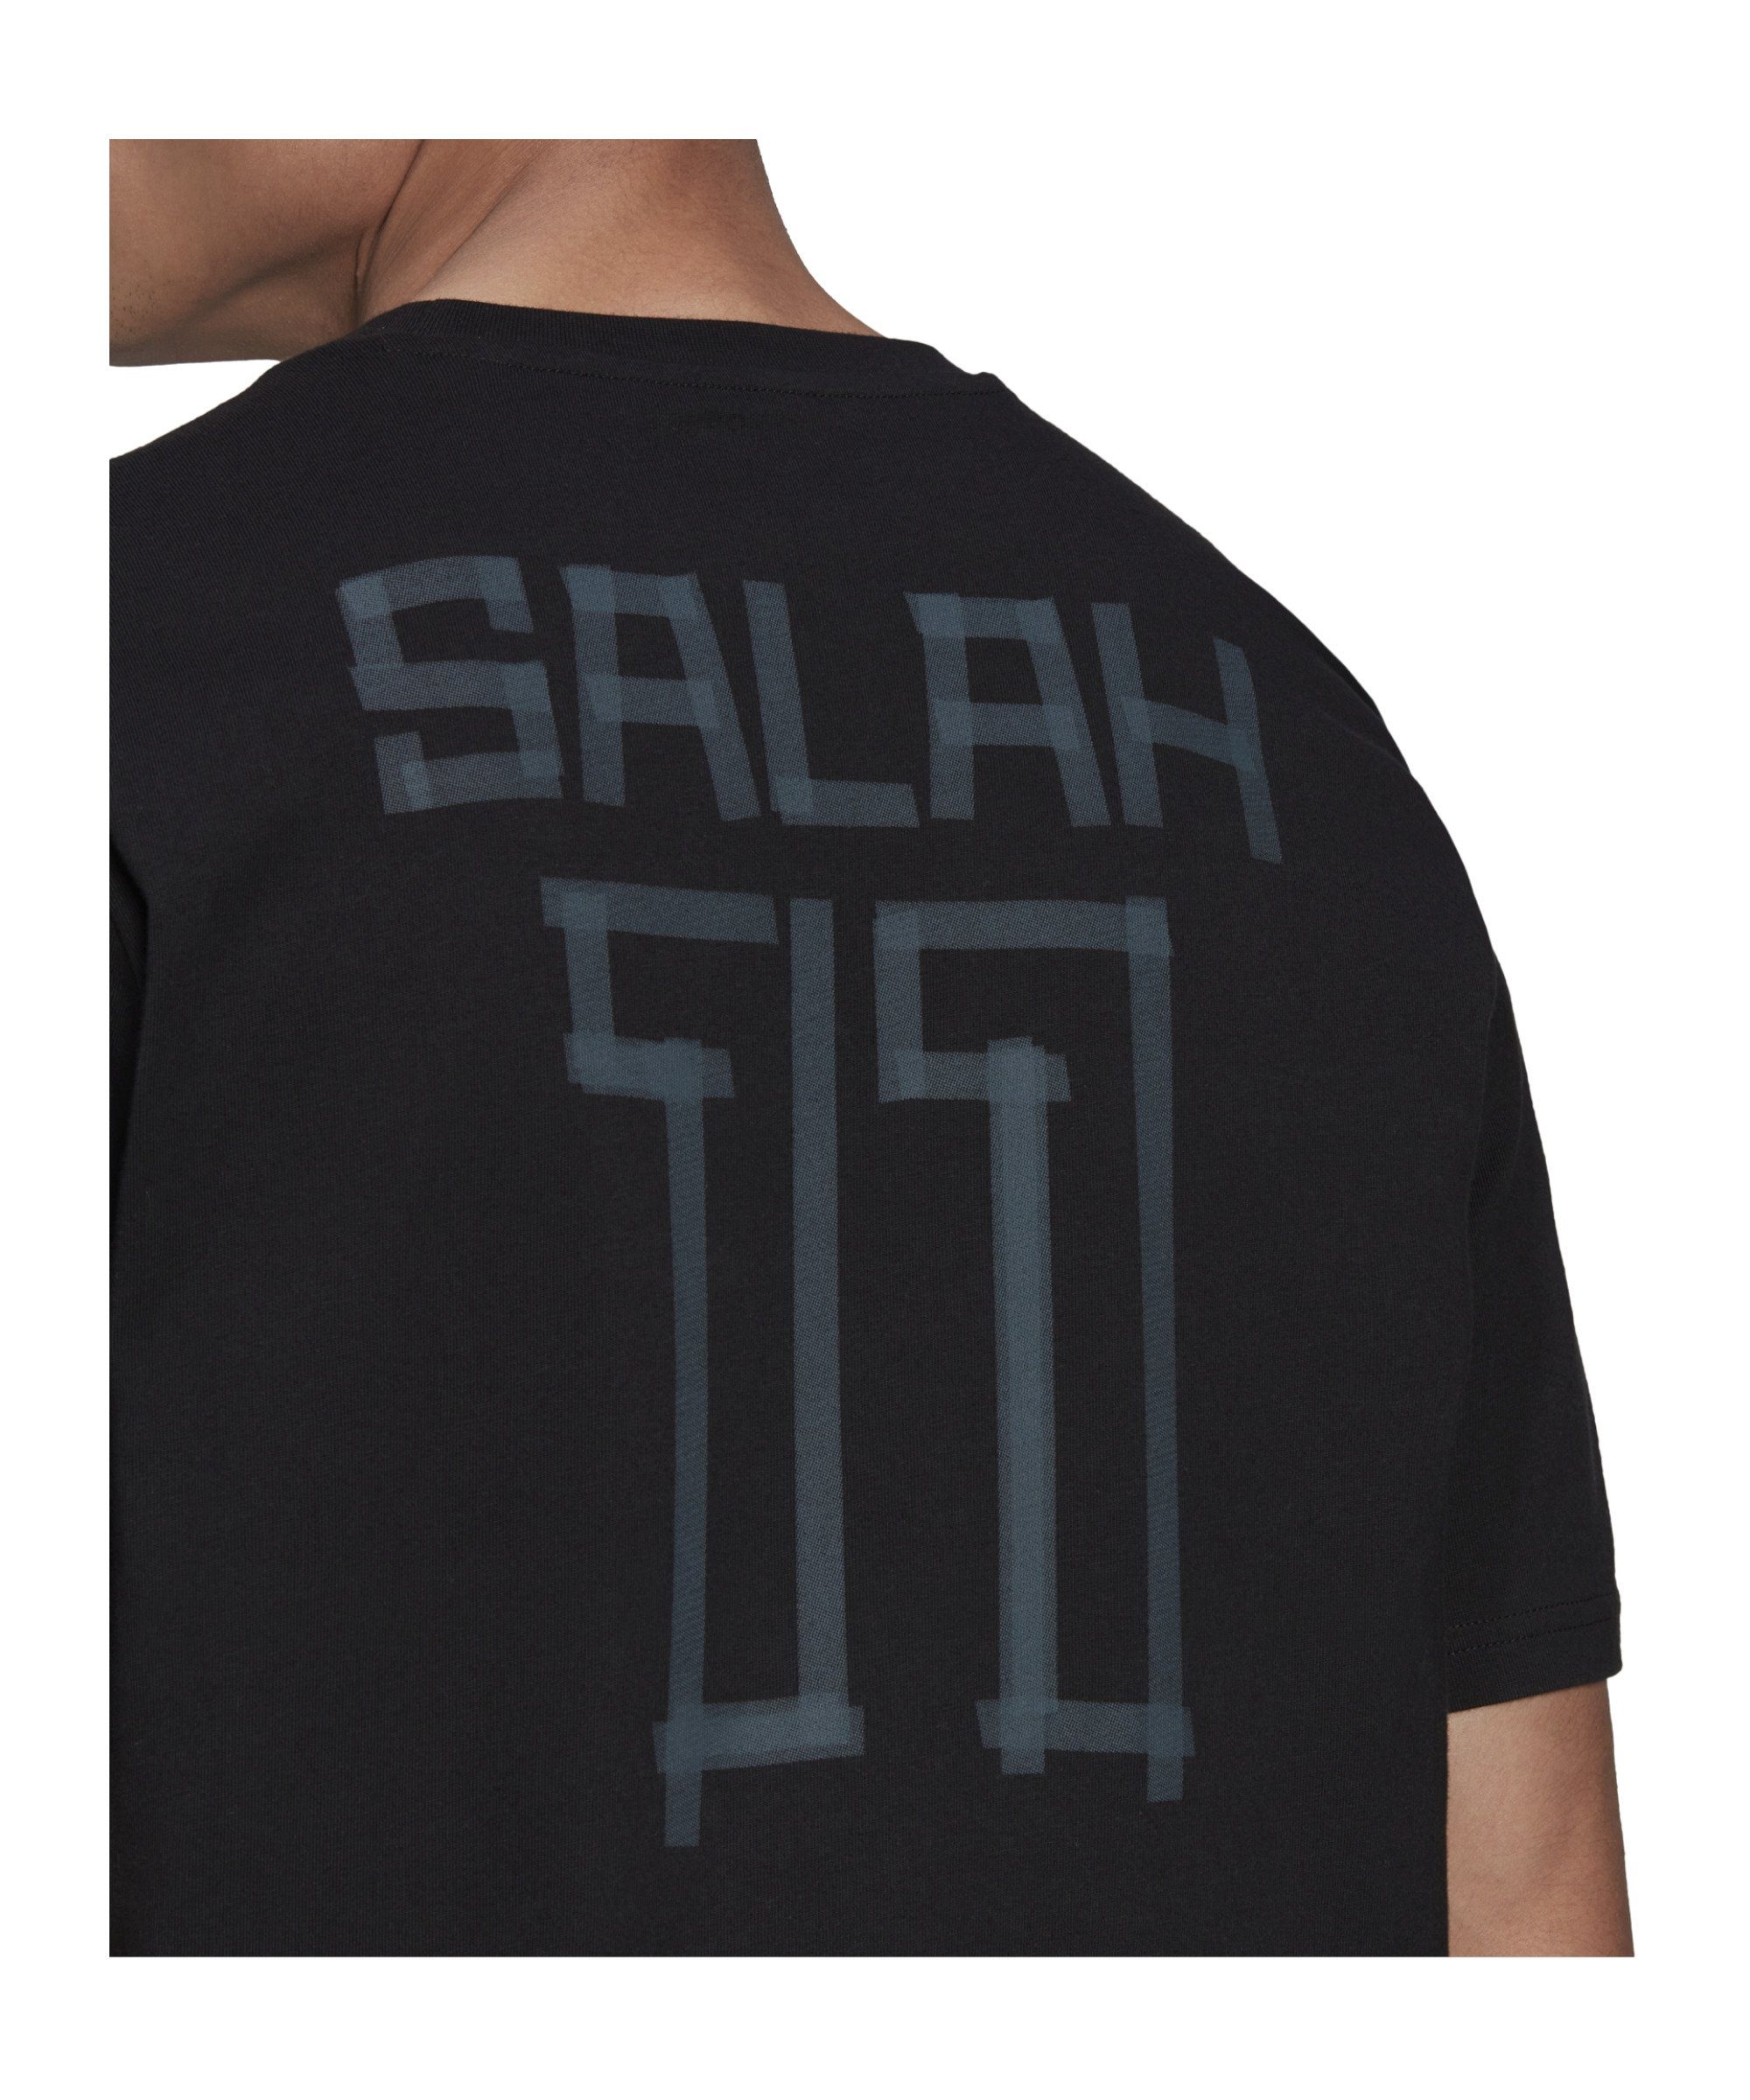 adidas Performance T-Shirt Salah icon default T-Shirt Graphic